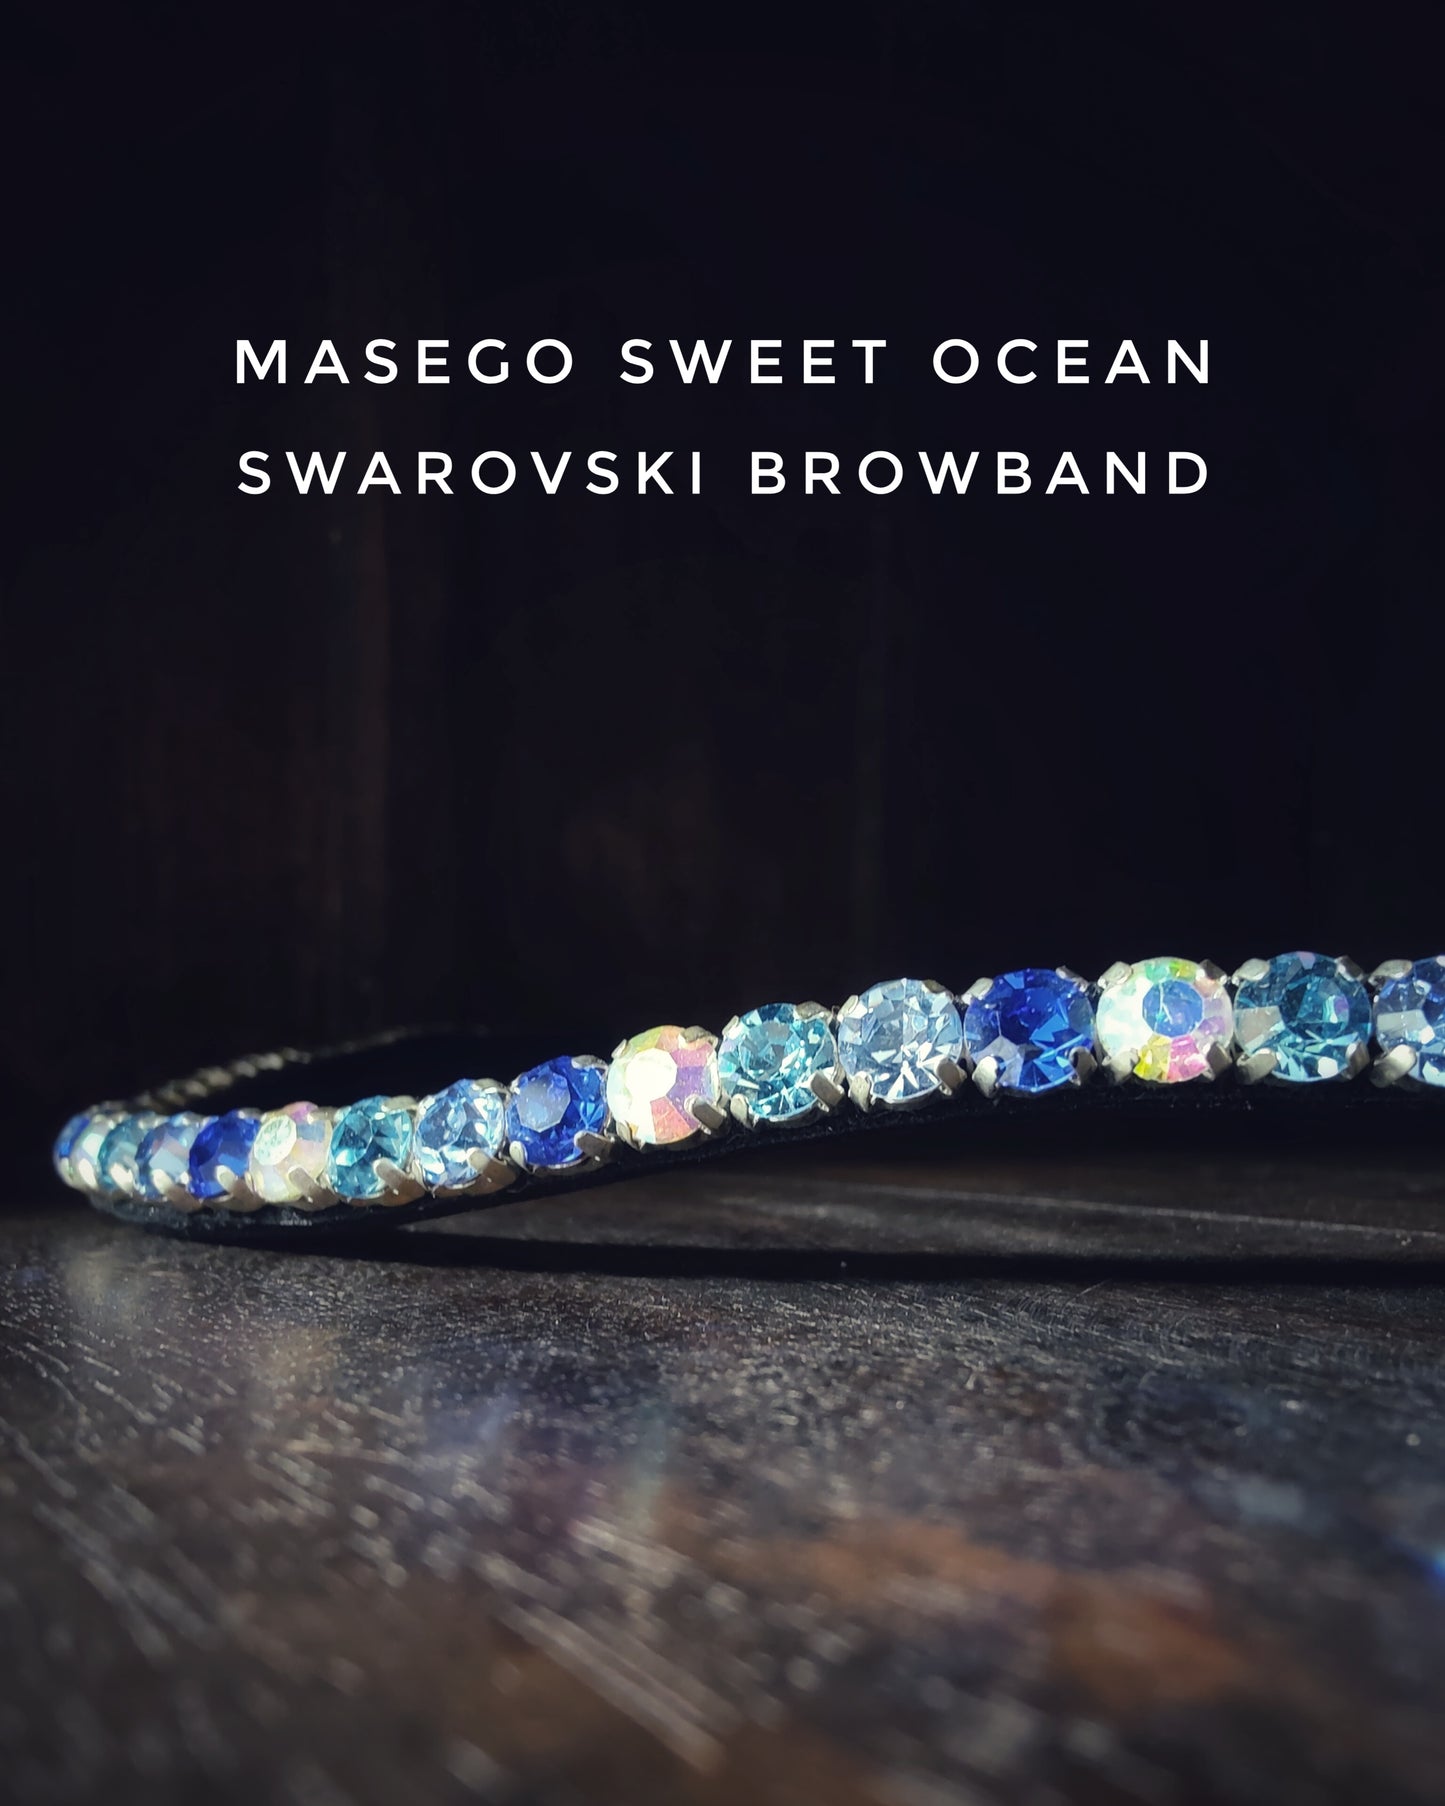 MASEGO horsewear sweet ocean browband - MASEGO horsewear